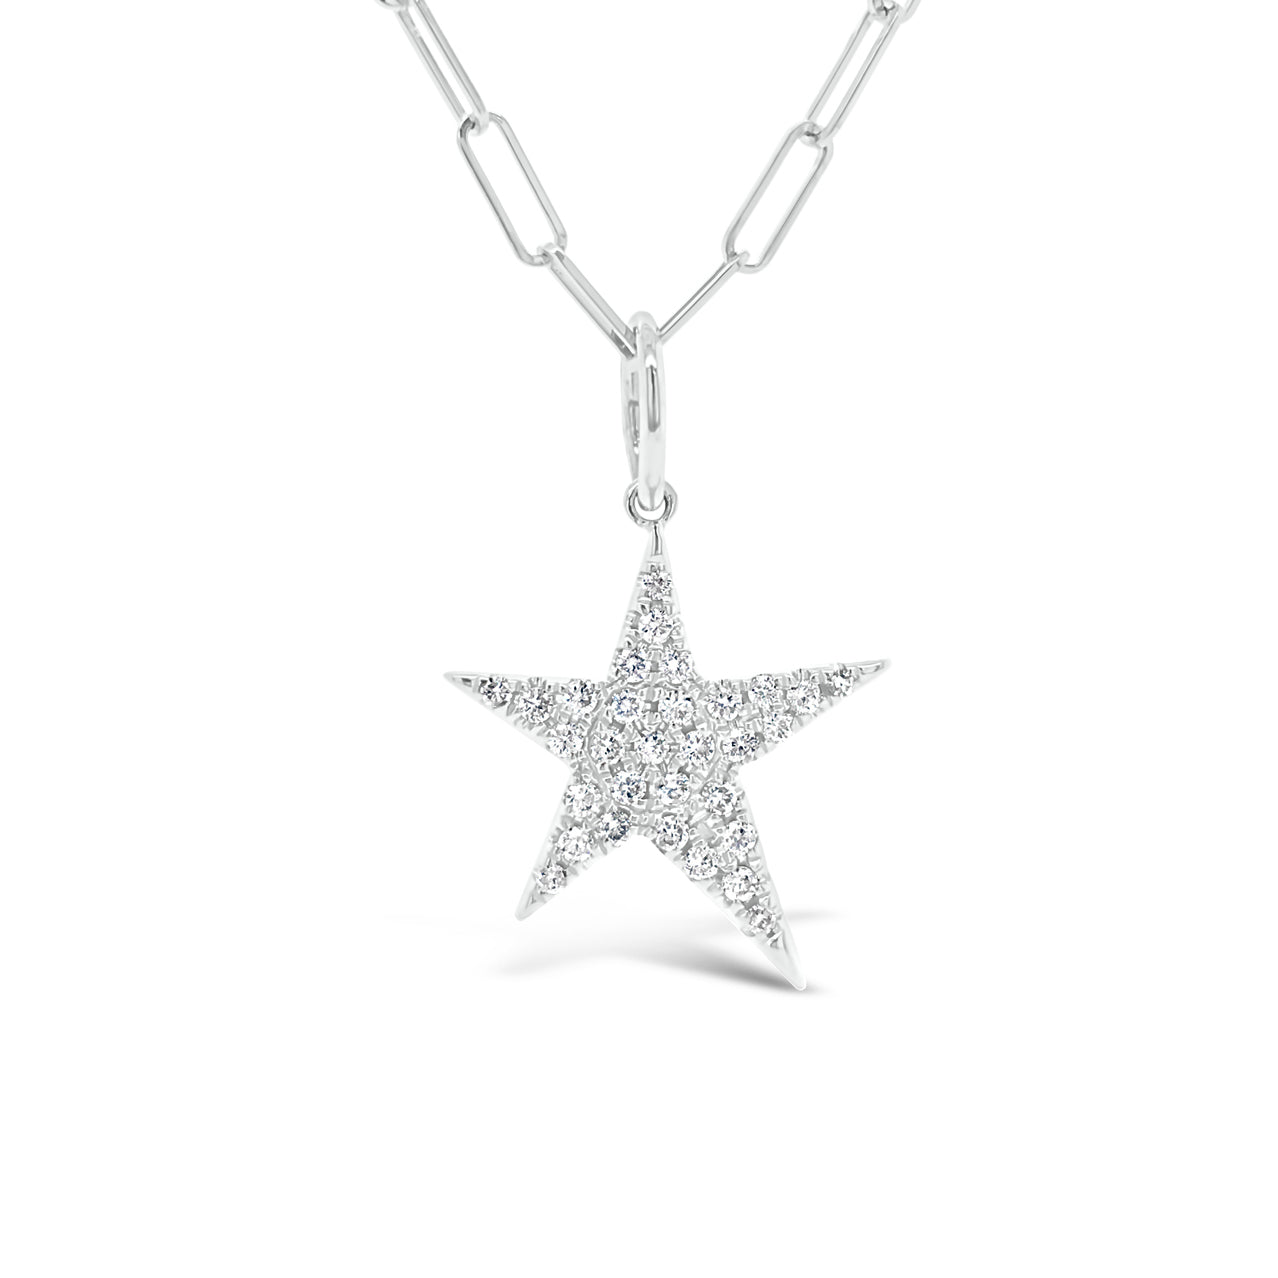 Diamond Star Pendant Charm -14K white gold weighing 1.55 grams -31 round diamonds totaling 0.26 carats